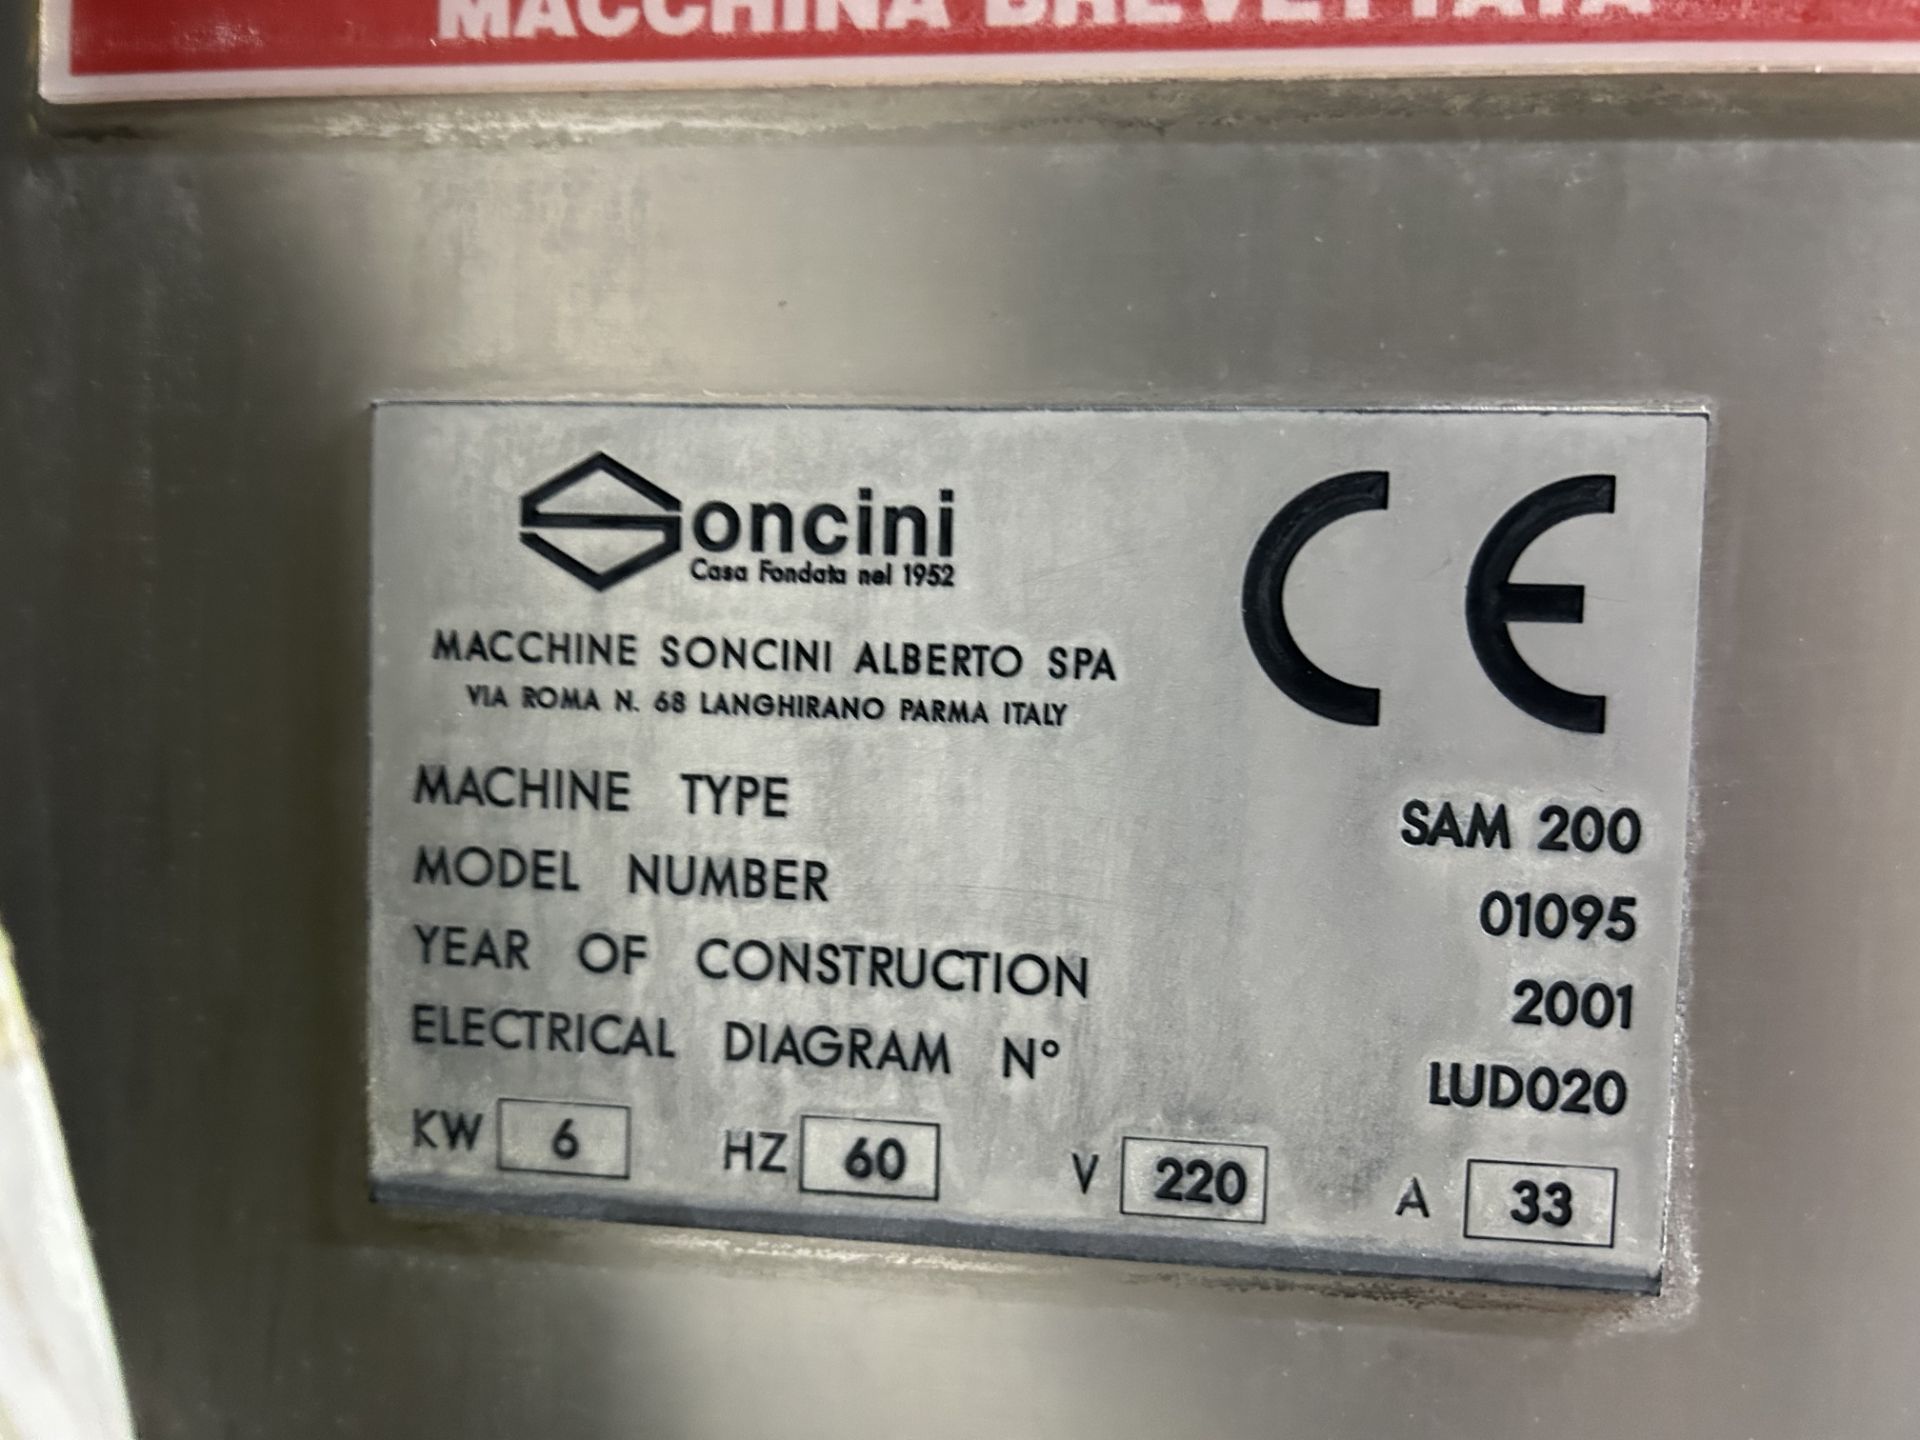 Sonicini Ham Processing Machines (Salting/messaging), Model #01095, Machine Type Sam 200, DOM 2001 - Image 4 of 4